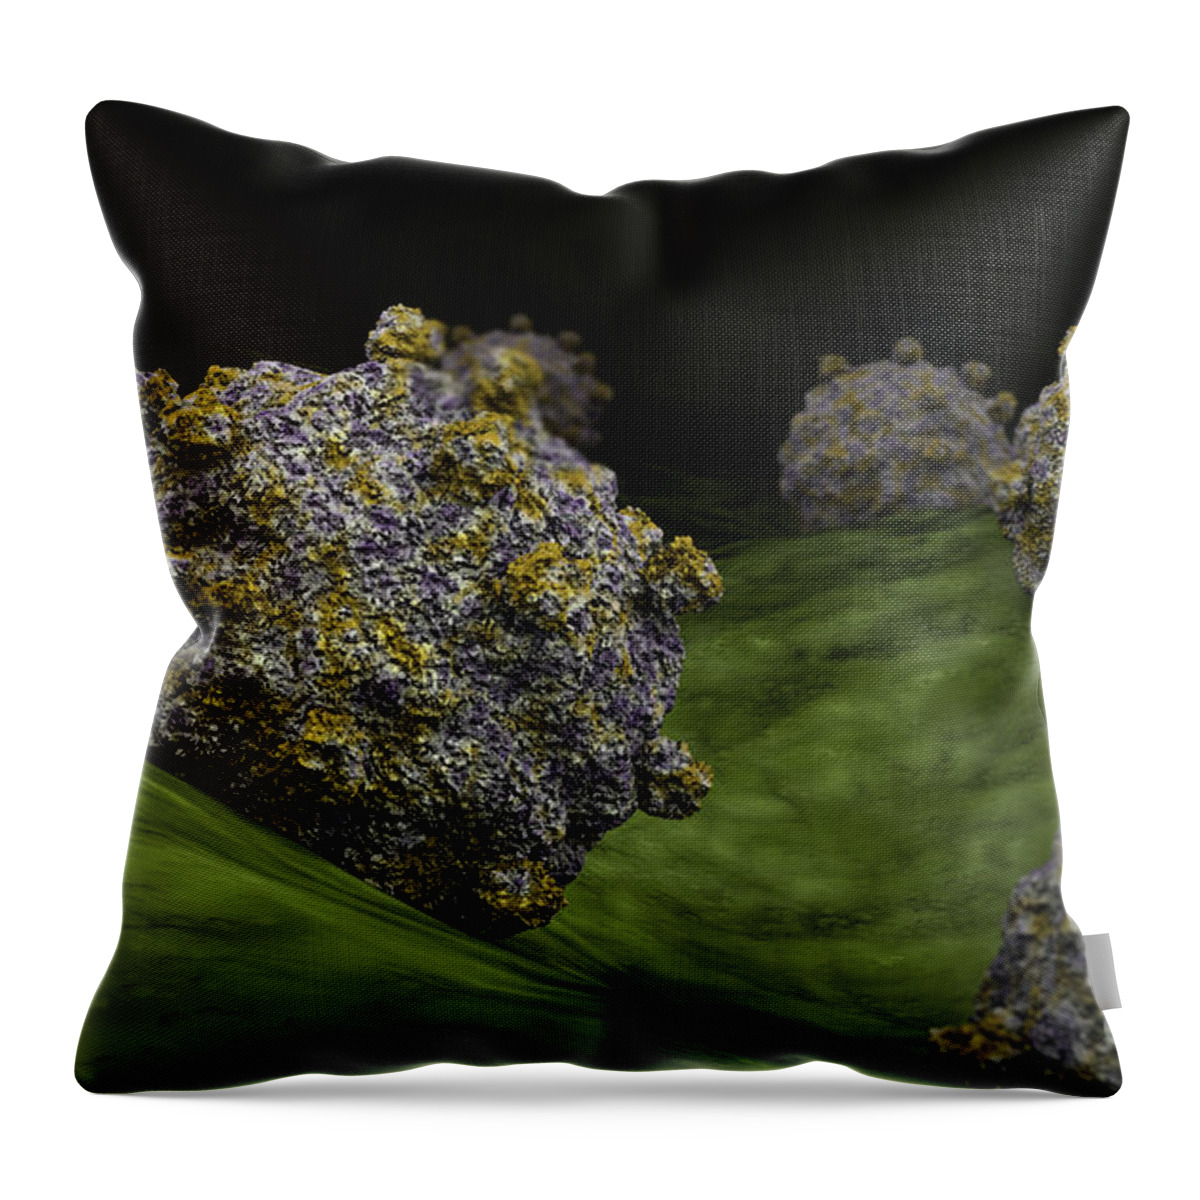 Horizontal Throw Pillow featuring the digital art Conceptual Image Of Coxsackievirus by Stocktrek Images